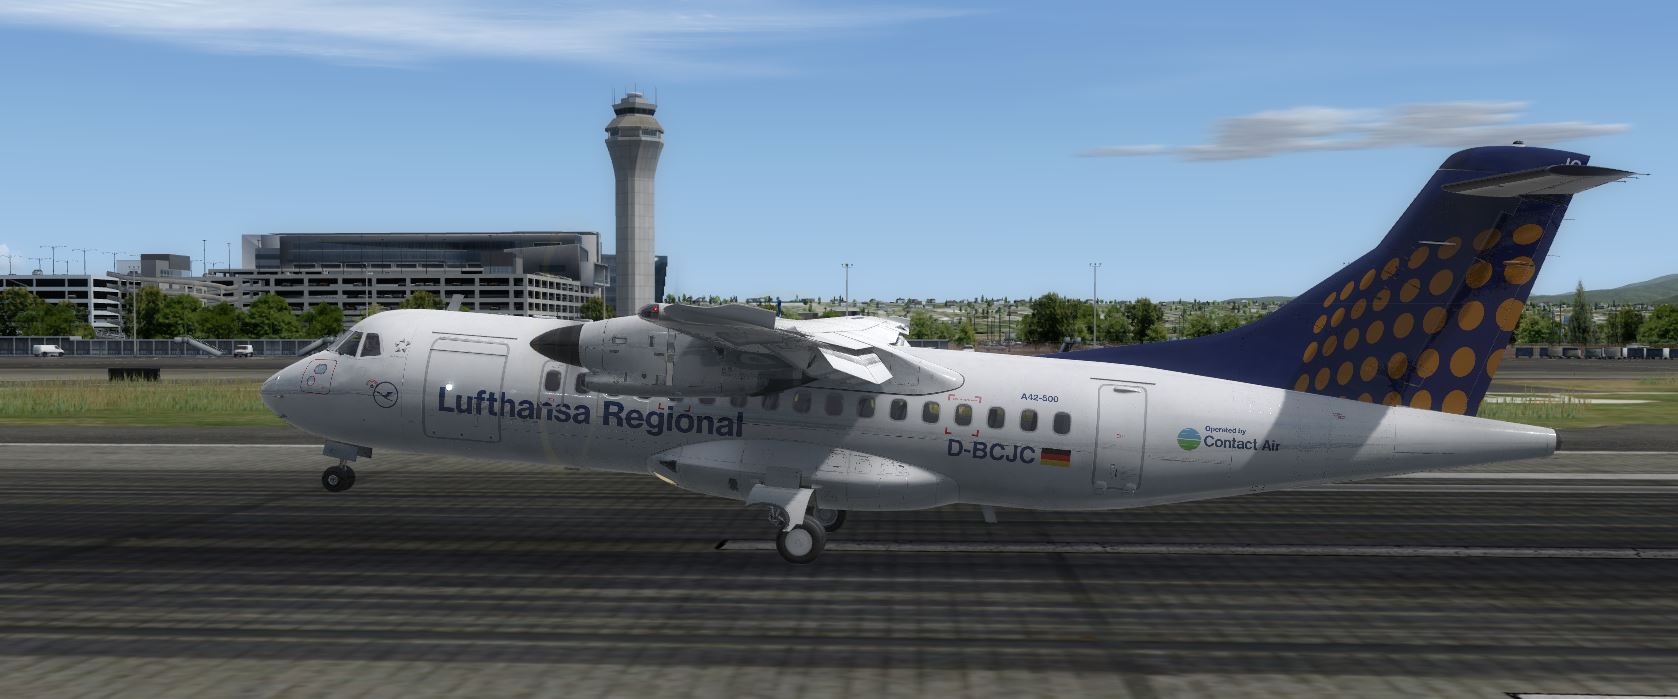 ATR42-500 Lufthansa-3254 